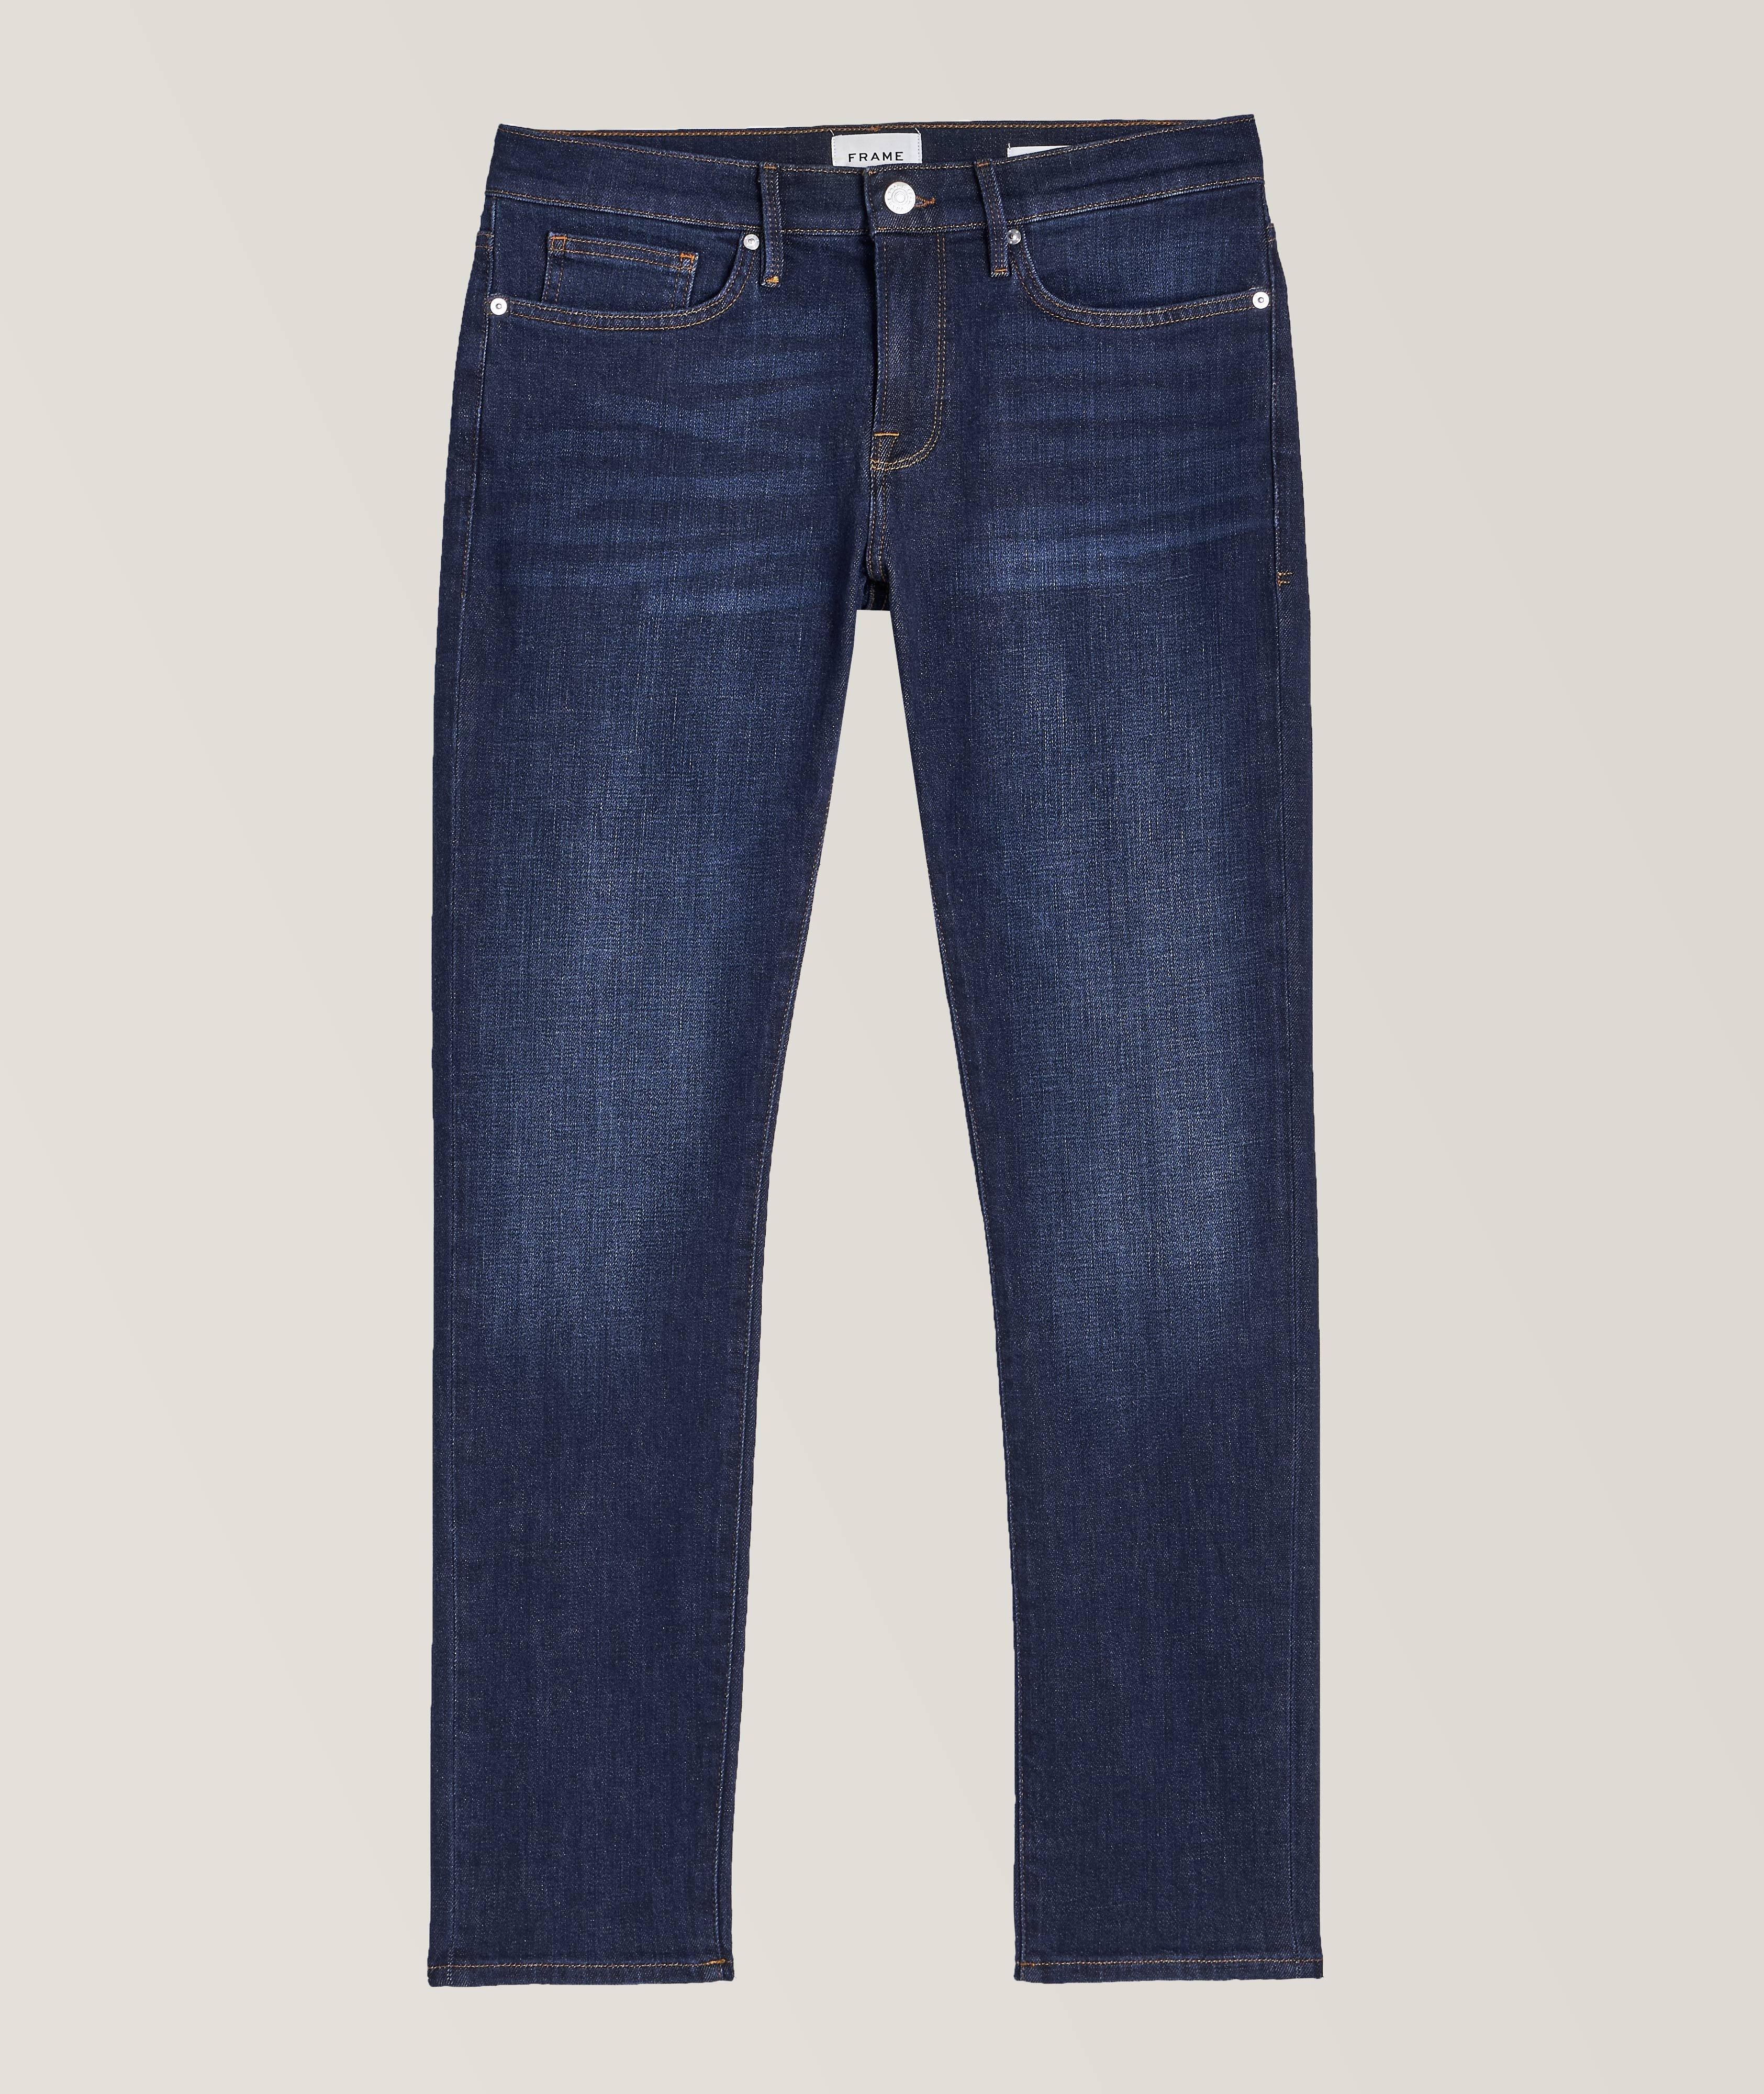 L'Homme Slim-Fit Jeans image 0